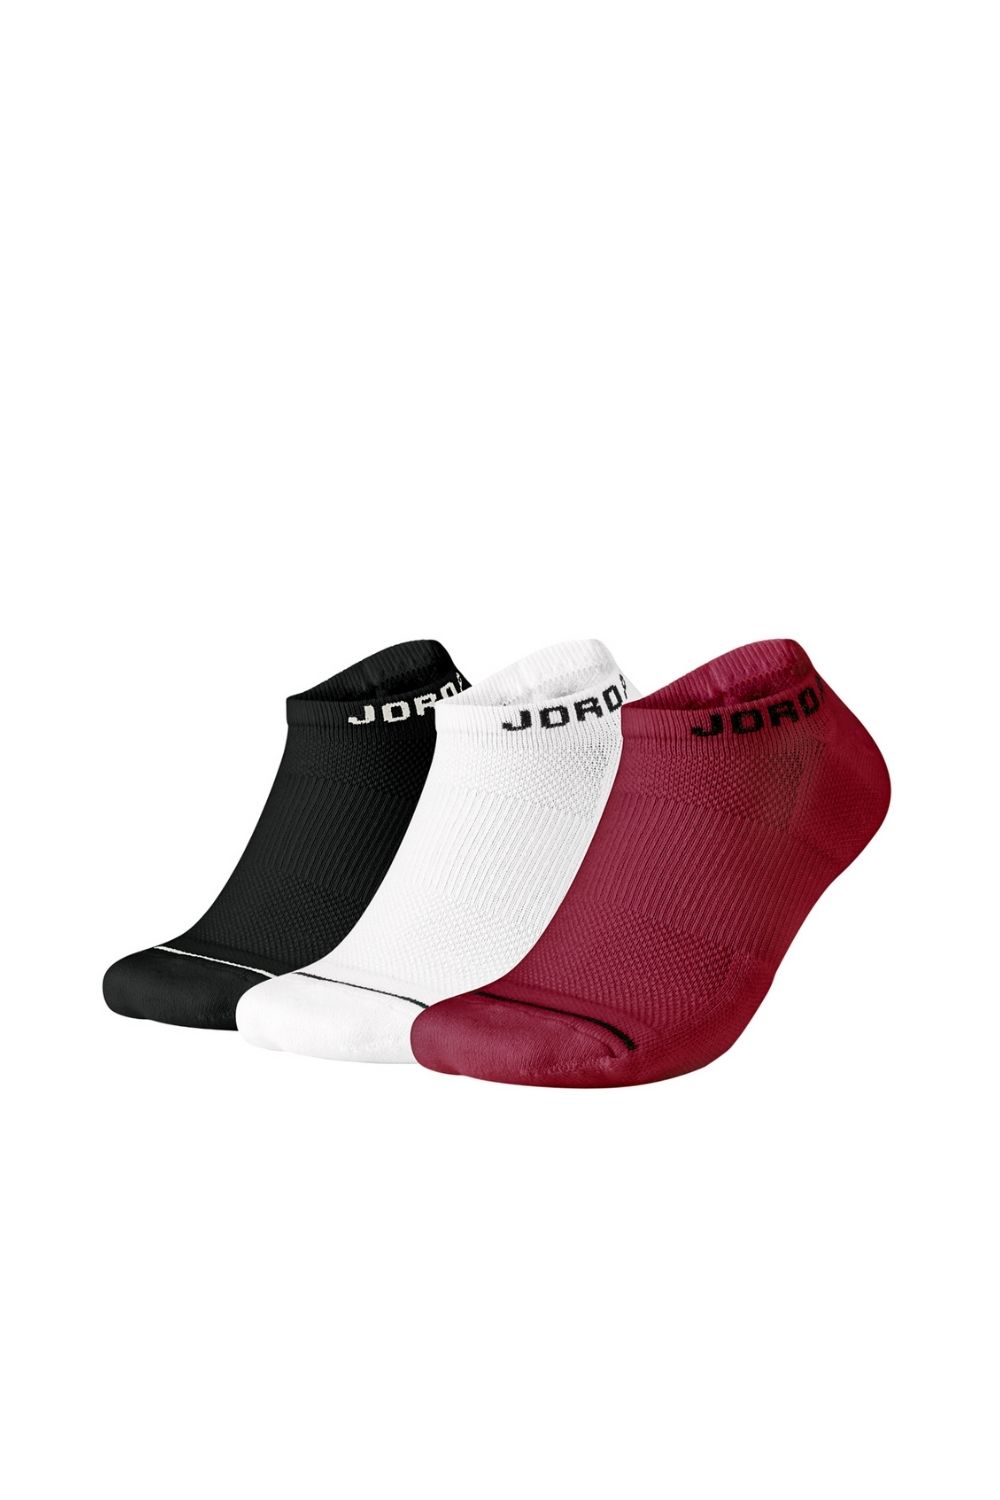 NIKE – Σετ unisex κάλτσες NIKE JORDAN EVRY MAX NS – 3PPK λευκές-μαύρες-κόκκινες 1514214.1-7191